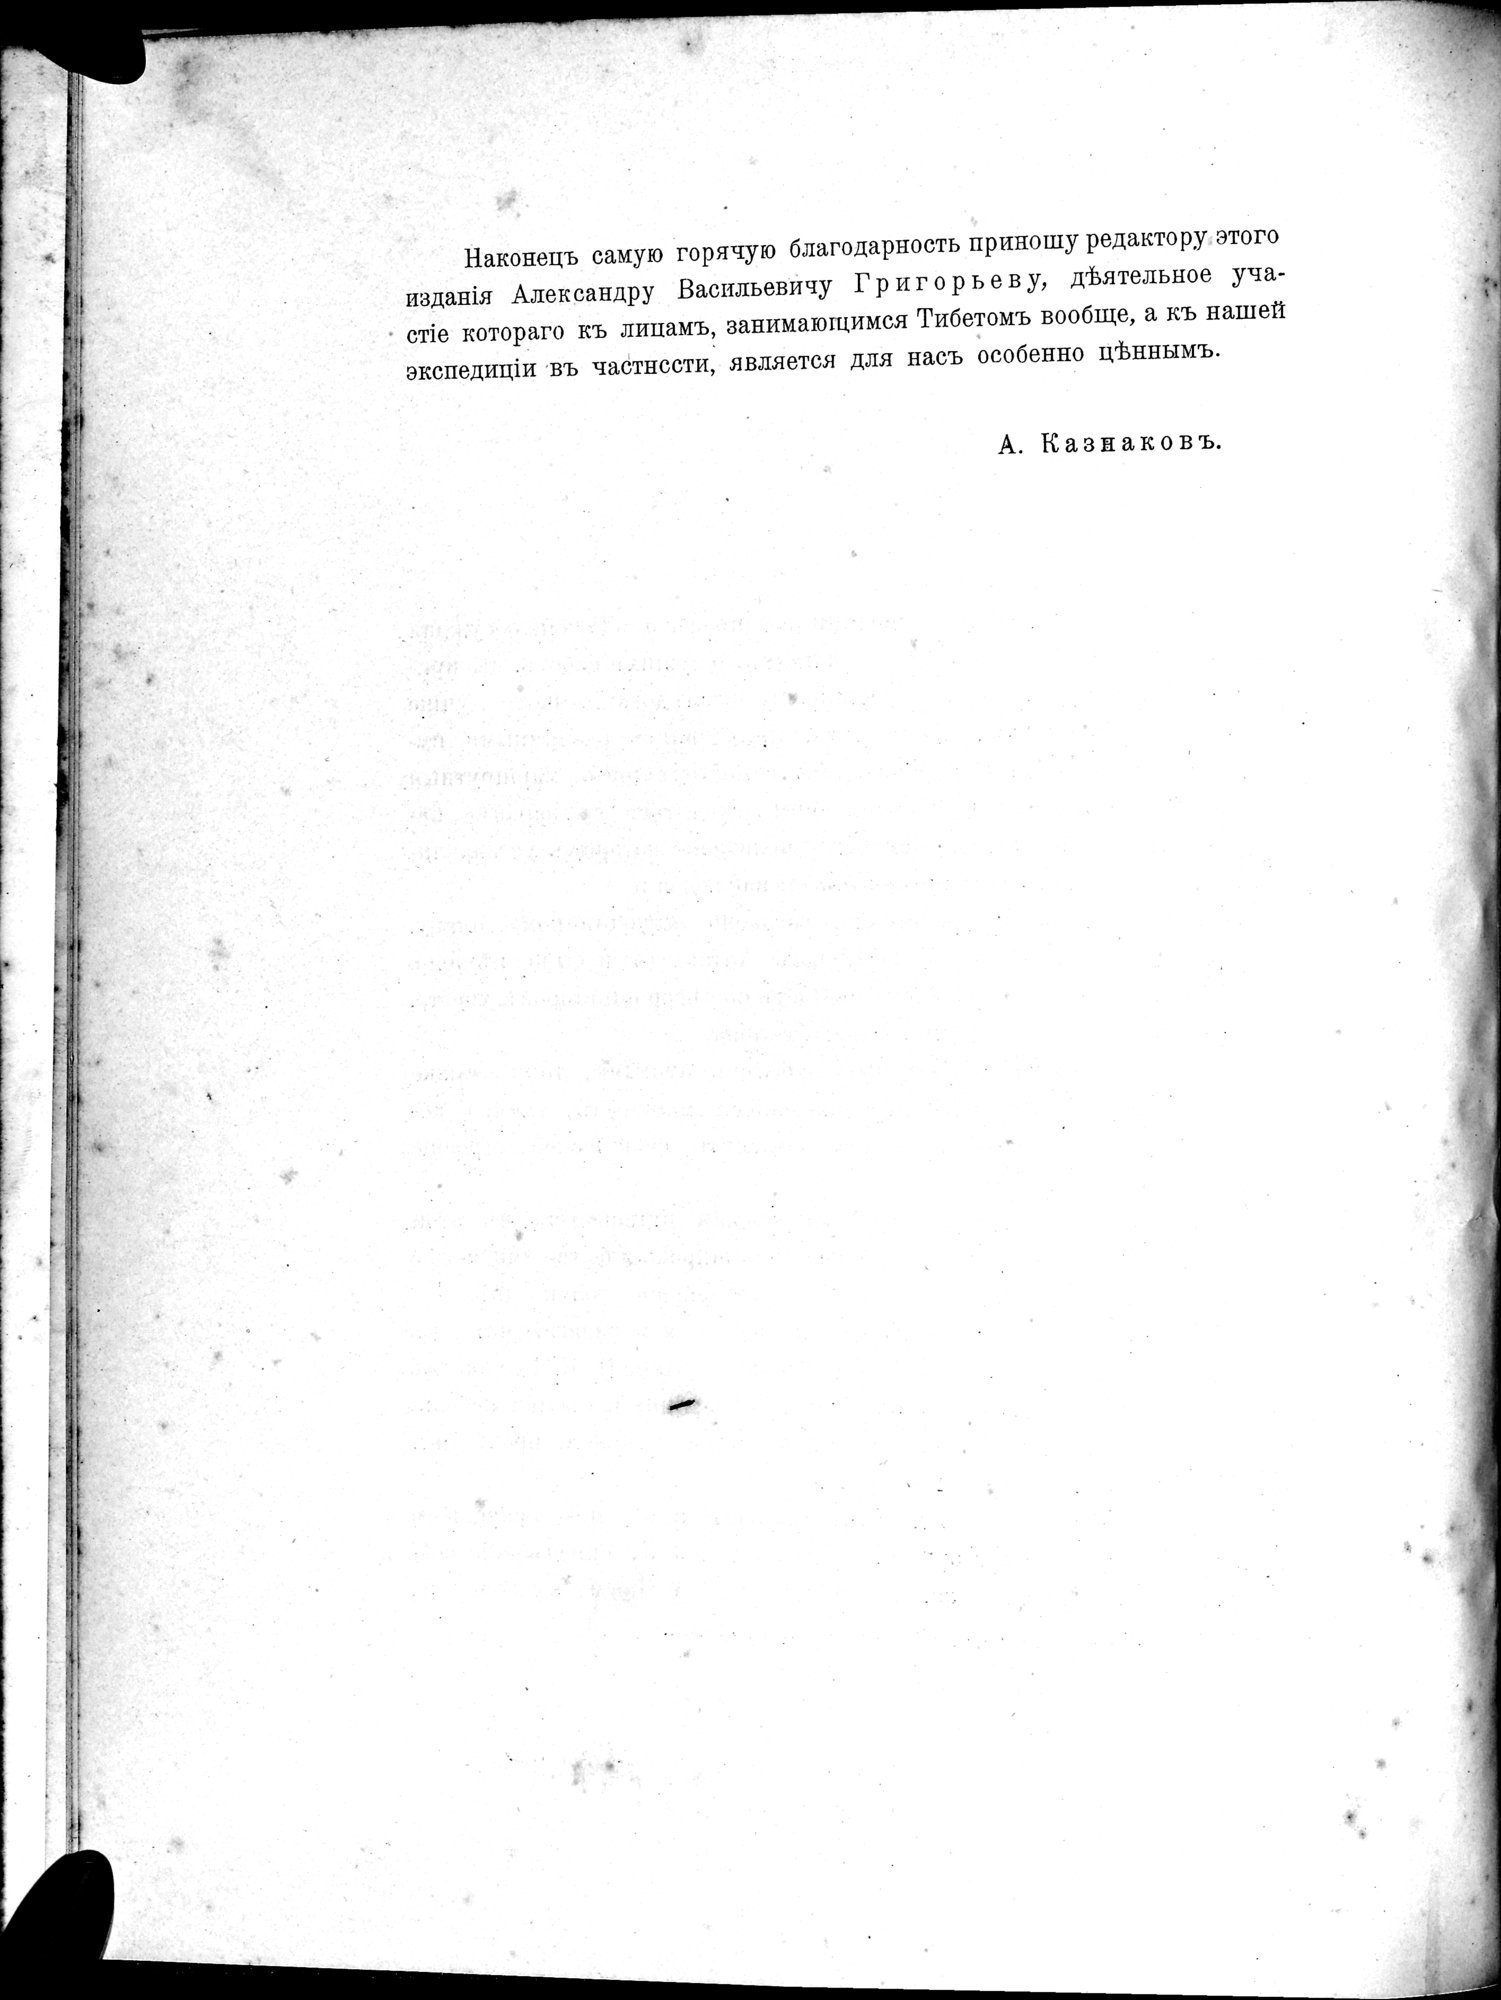 Mongoliia i Kam : vol.3 / Page 18 (Grayscale High Resolution Image)